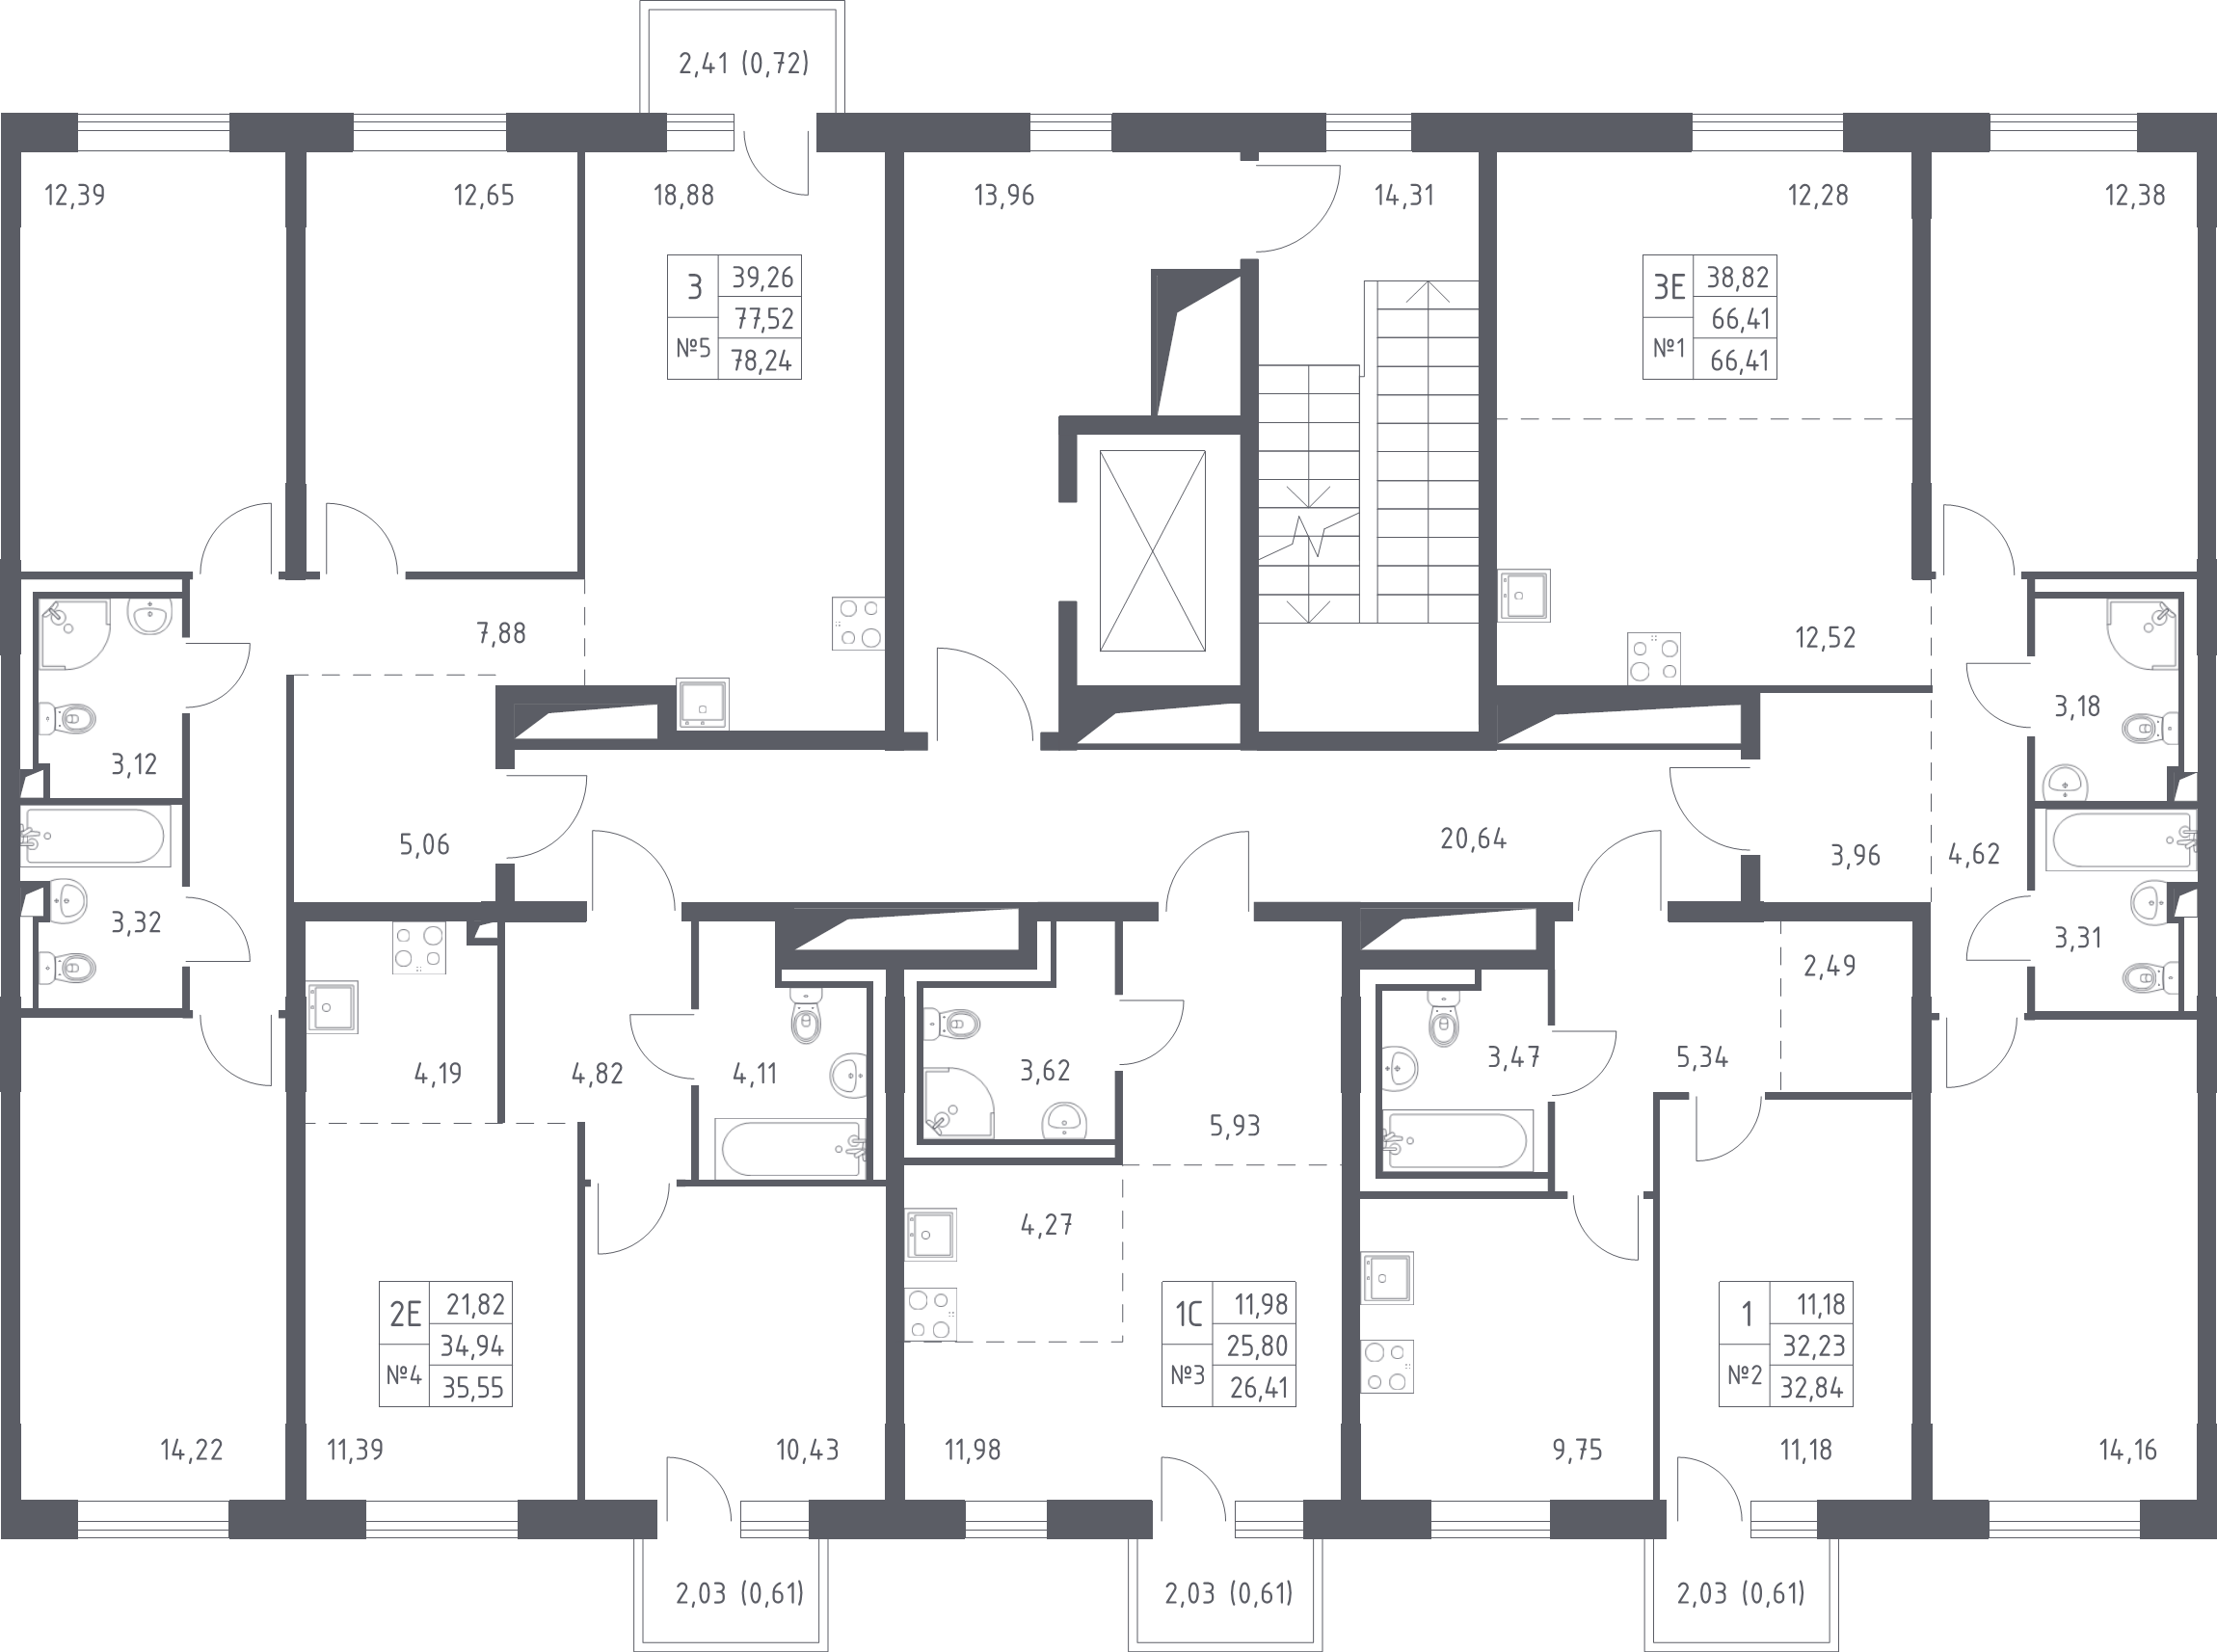 3-комнатная (Евро) квартира, 66.41 м² в ЖК "Квартал Лаголово" - планировка этажа